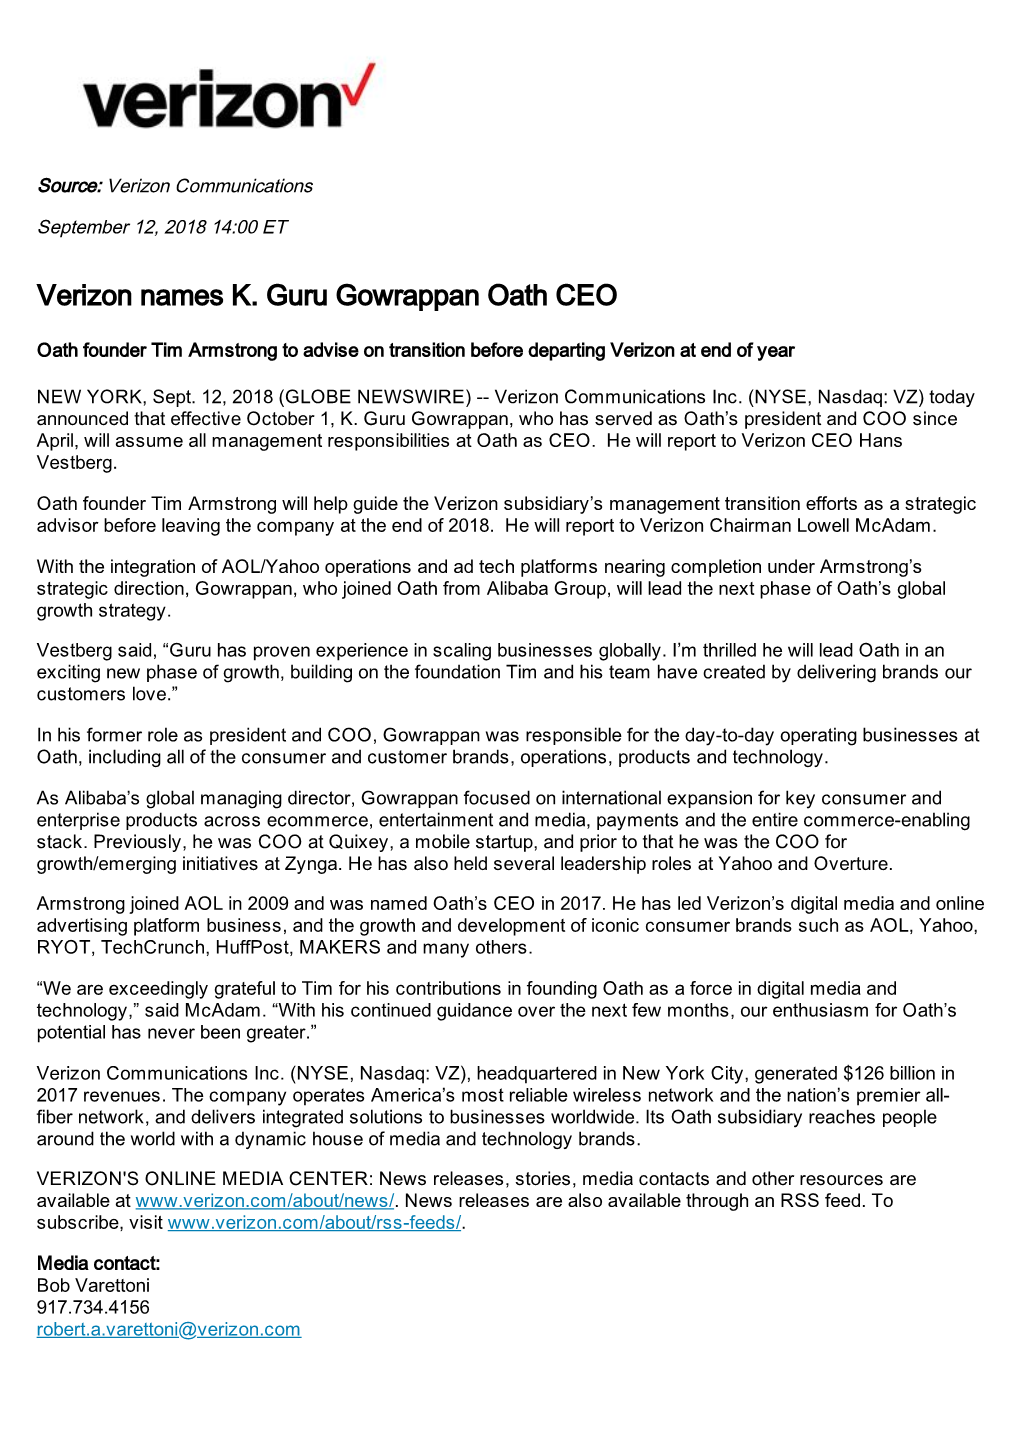 Verizon Names K. Guru Gowrappan Oath CEO